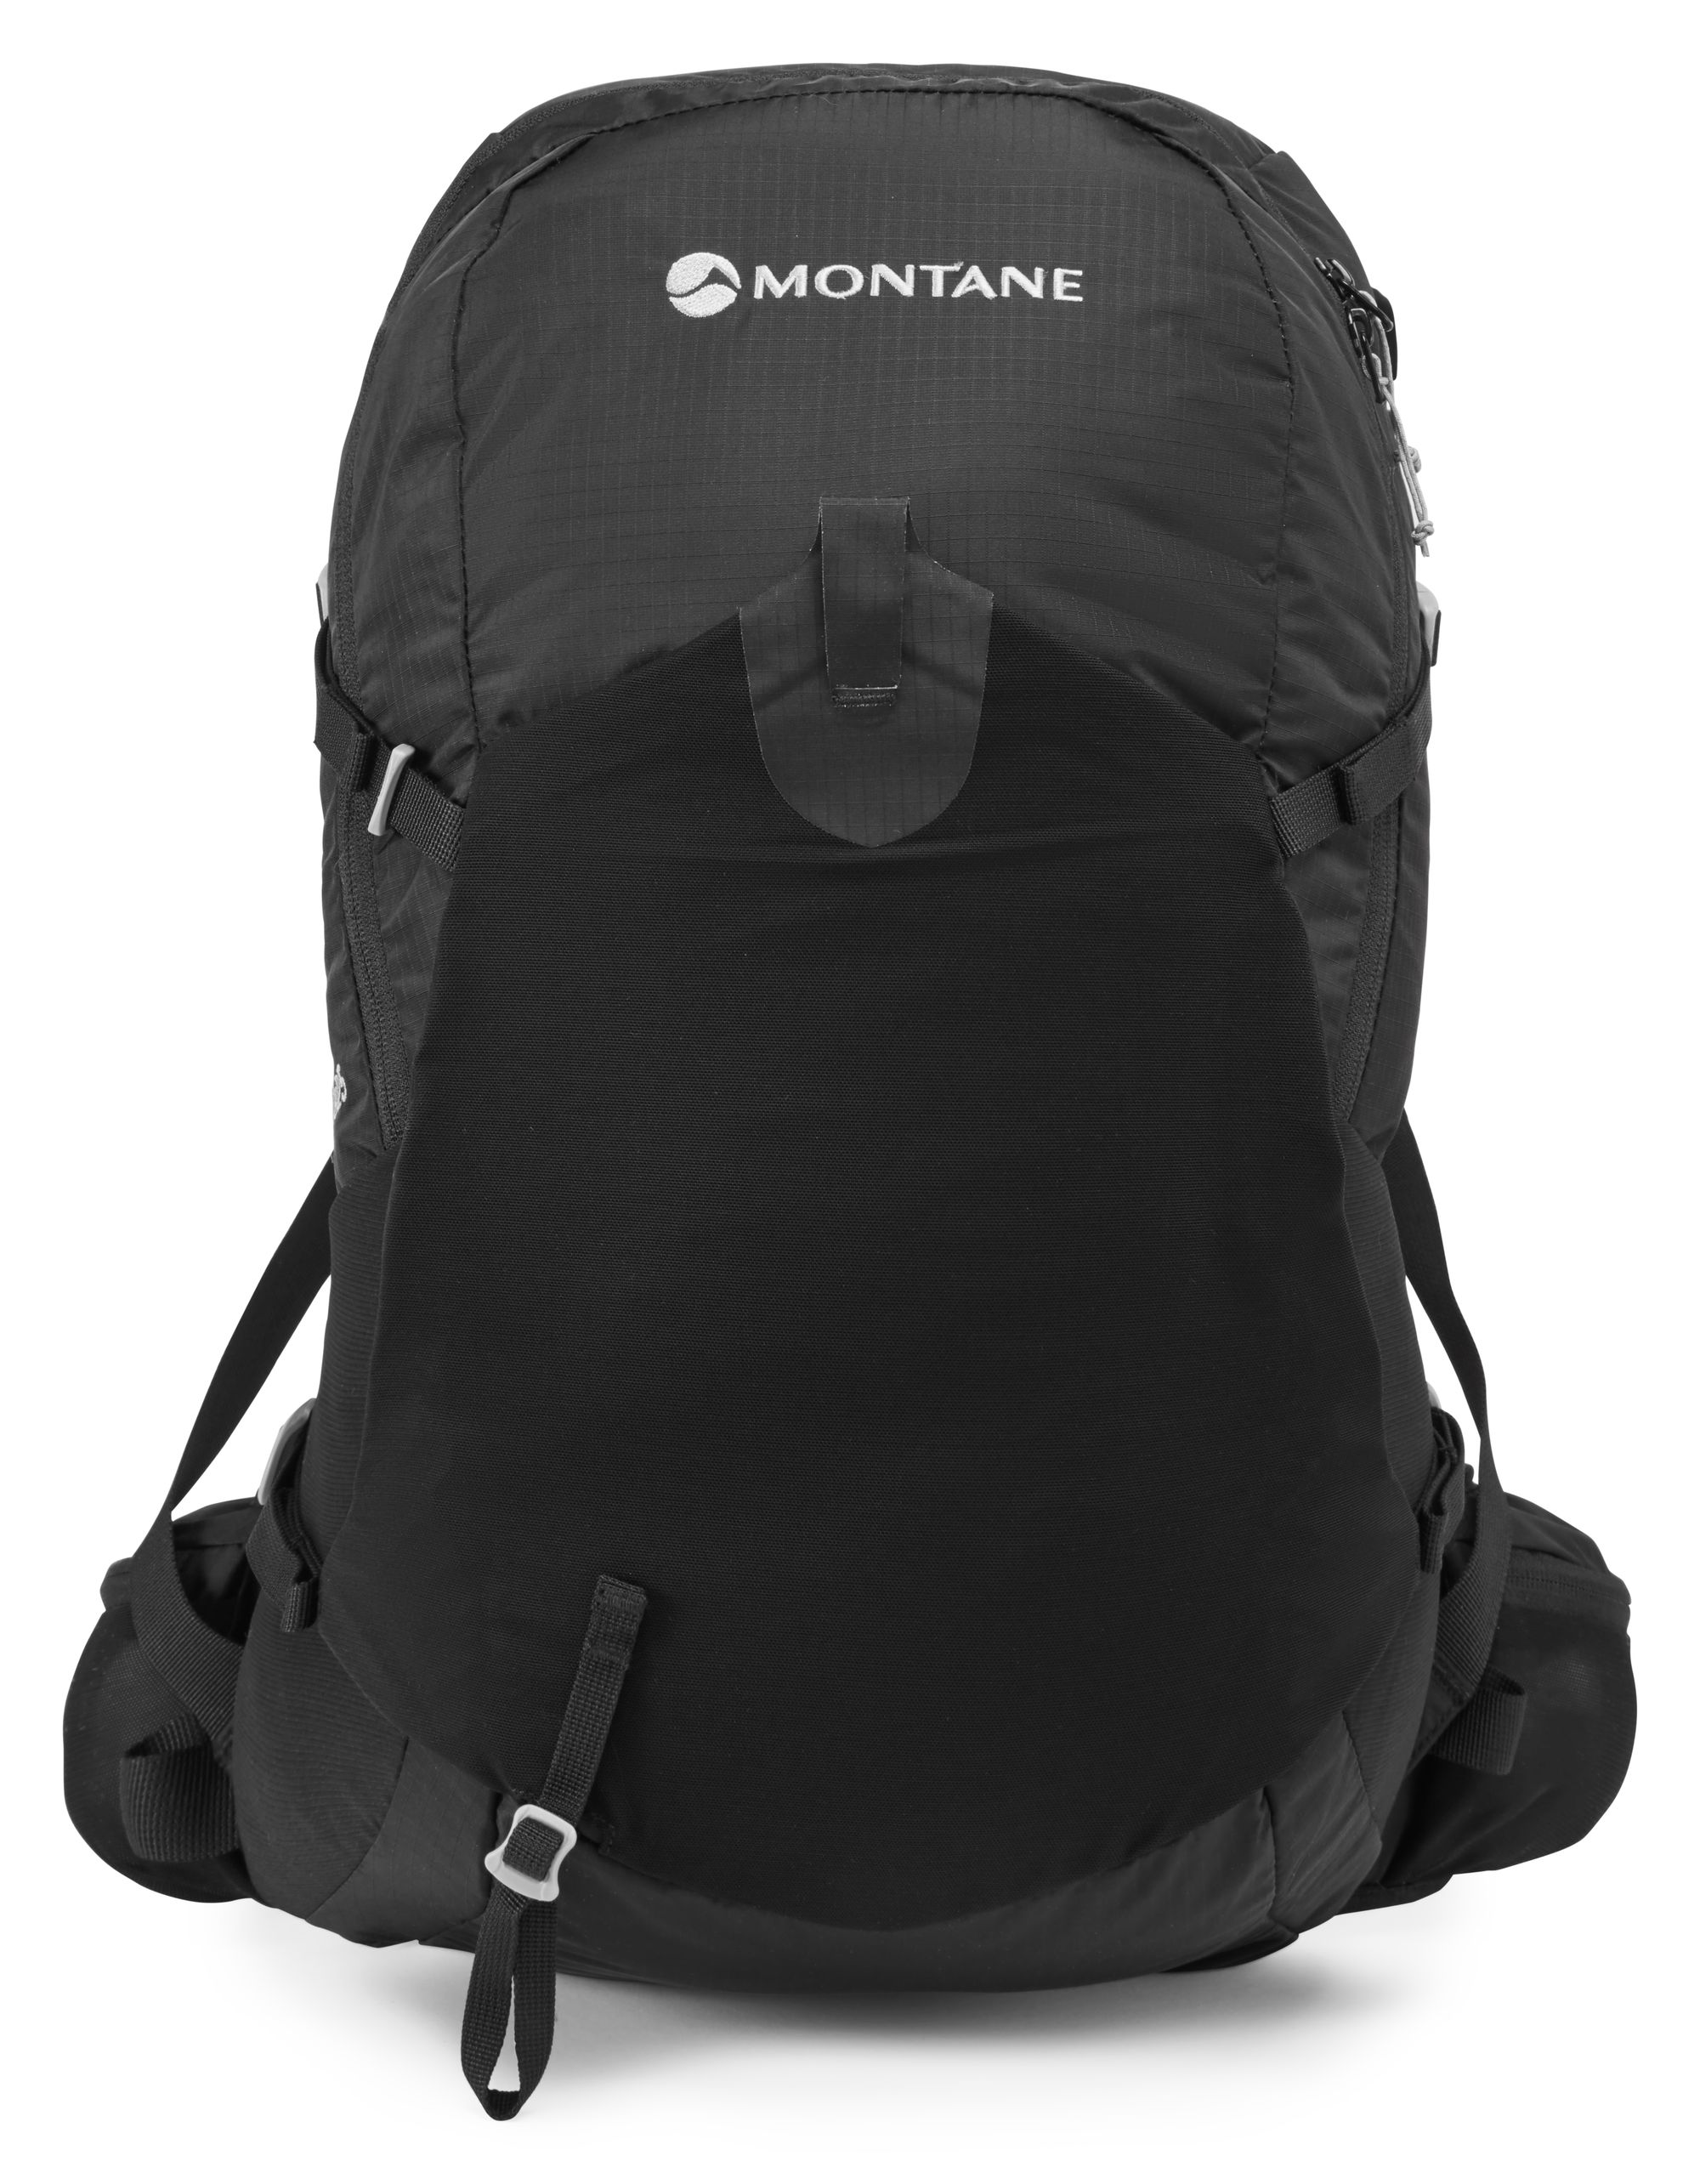 Montane AZOTE 25-BLACK-ONE SIZE / ADJUST batoh černý